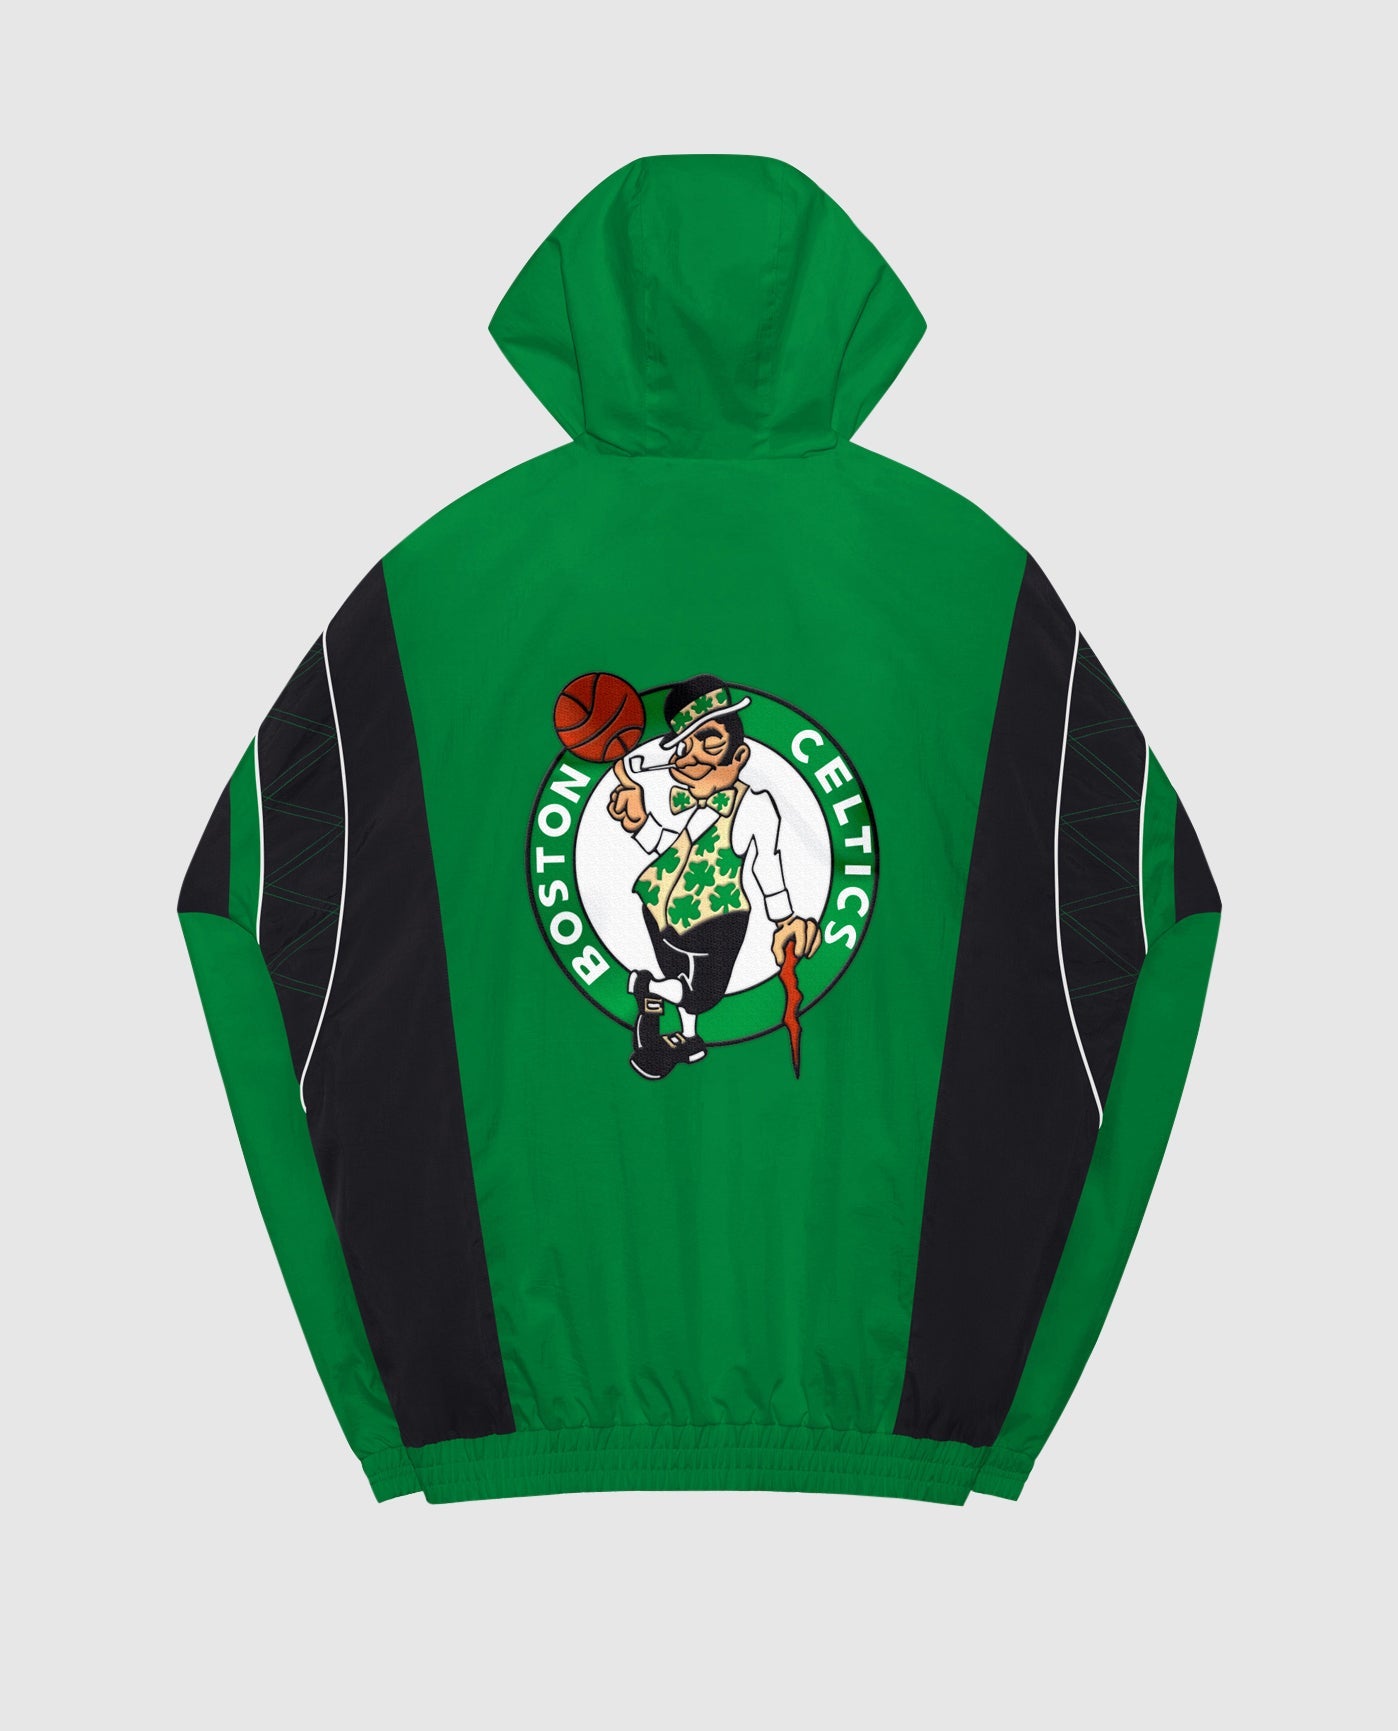 Vintage 90s NBA Boston Celtics Pullover Half Zip Starter Jacket Size Large